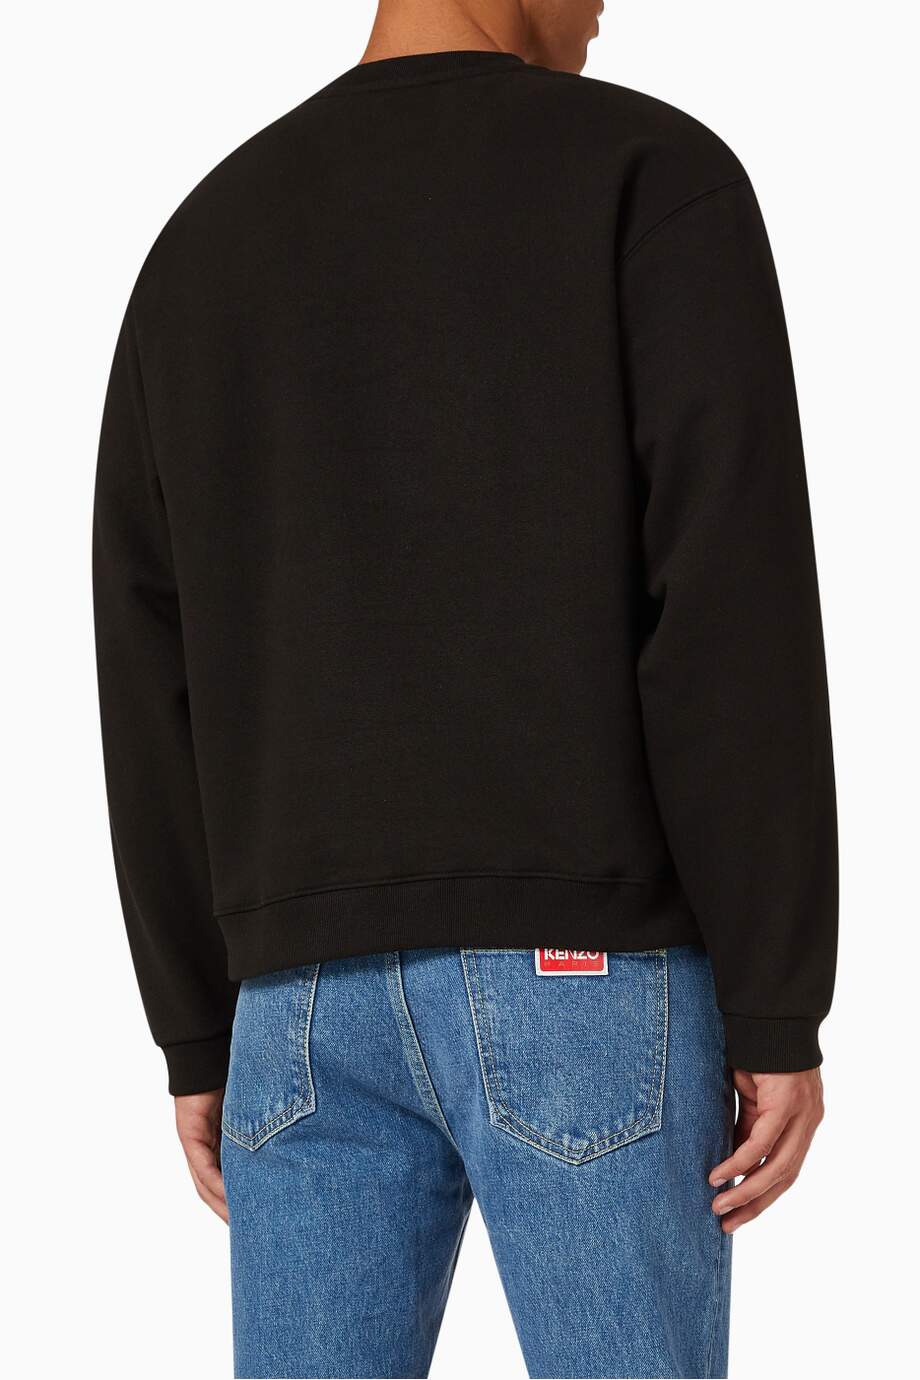 KENZO Paris Sweatshirt in Cotton